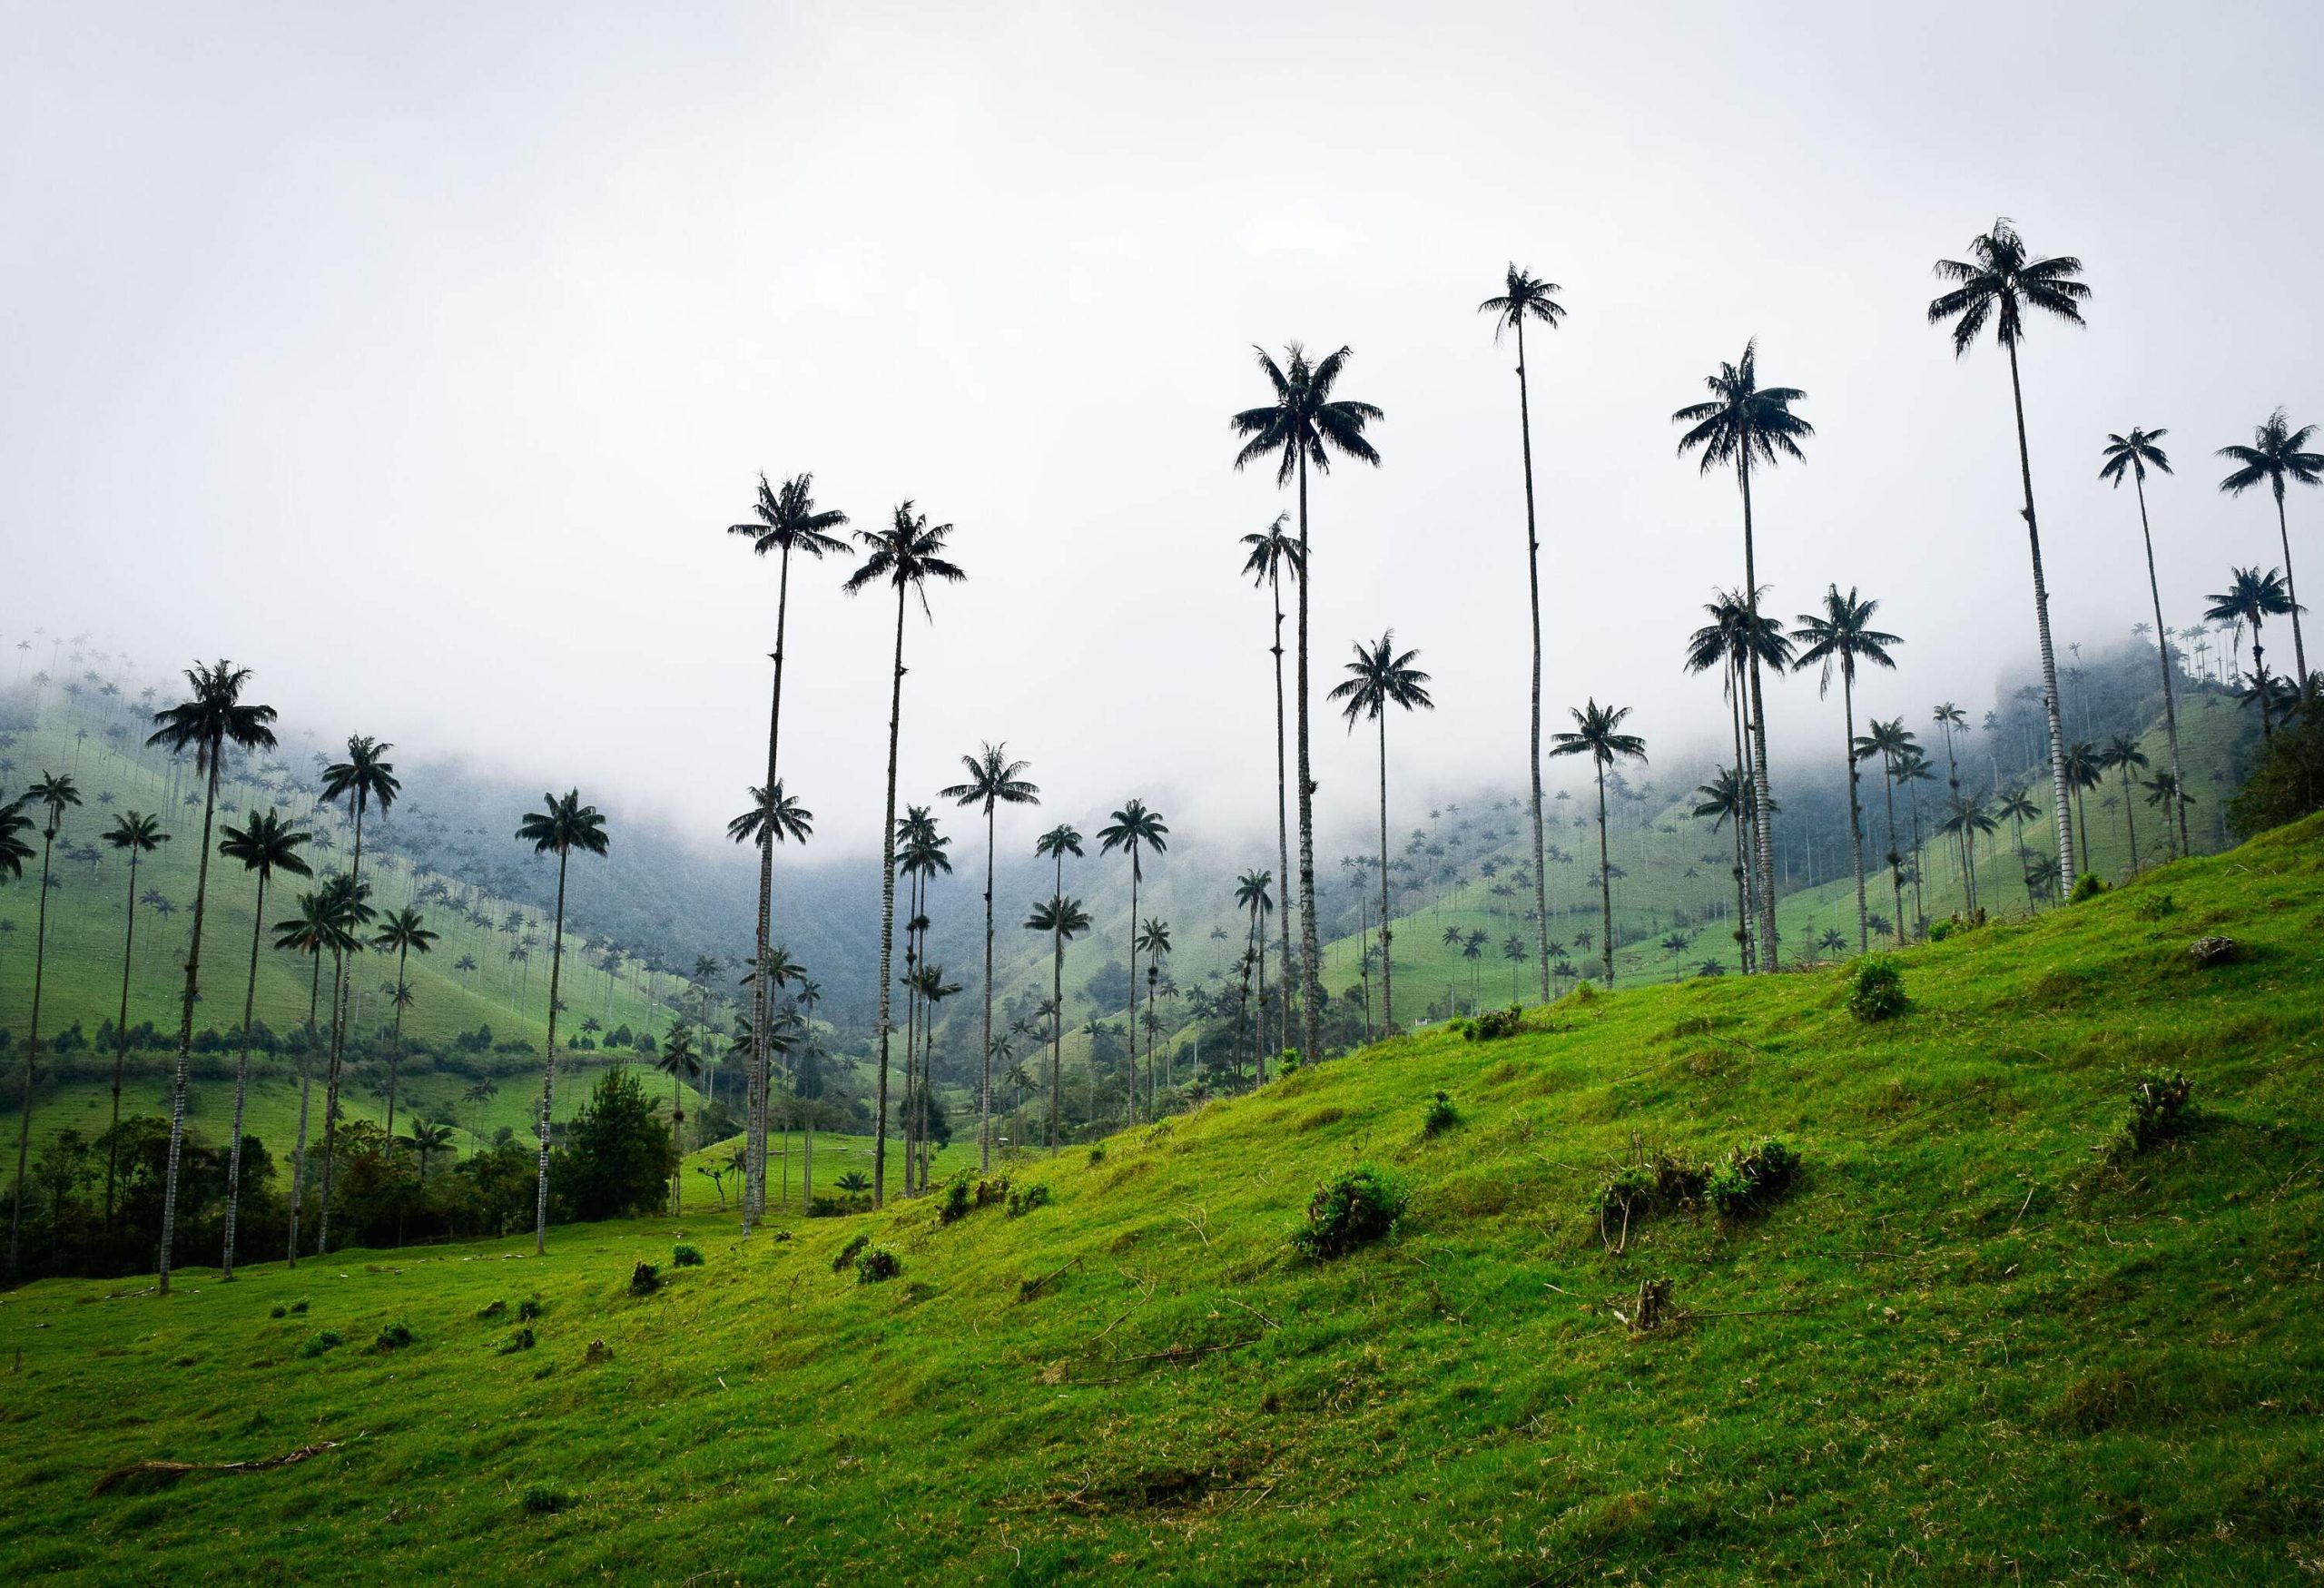 A grove of tall palm trees on a foggy hill.